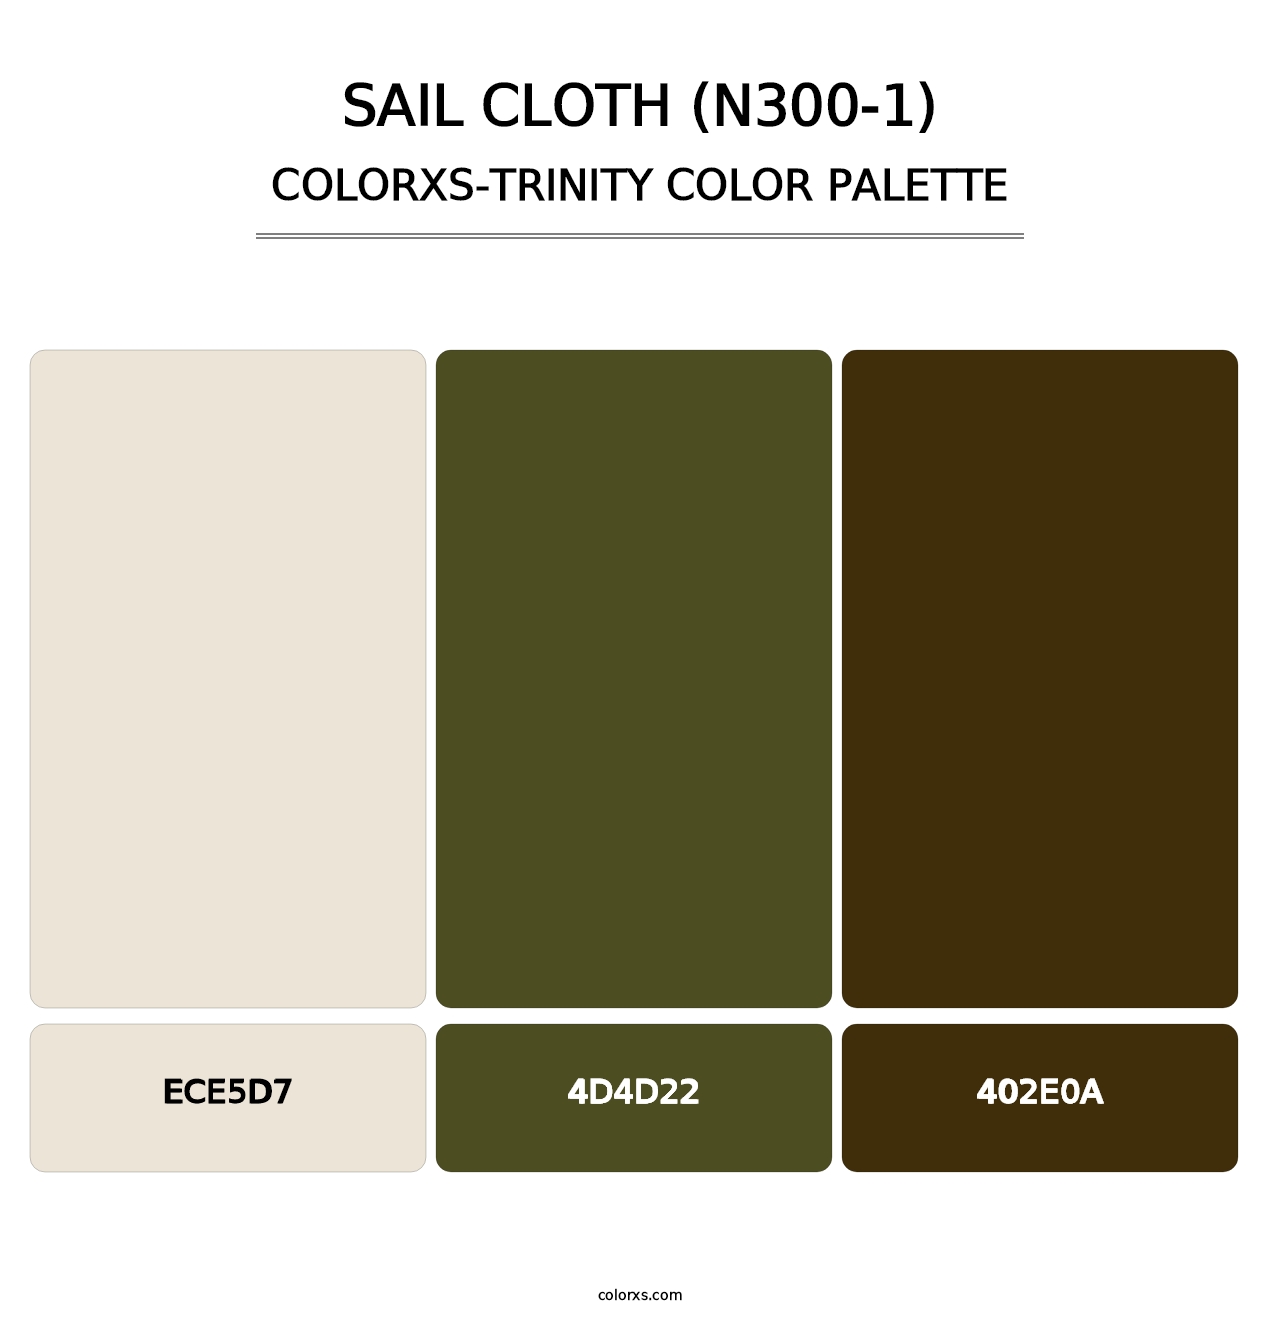 Sail Cloth (N300-1) - Colorxs Trinity Palette